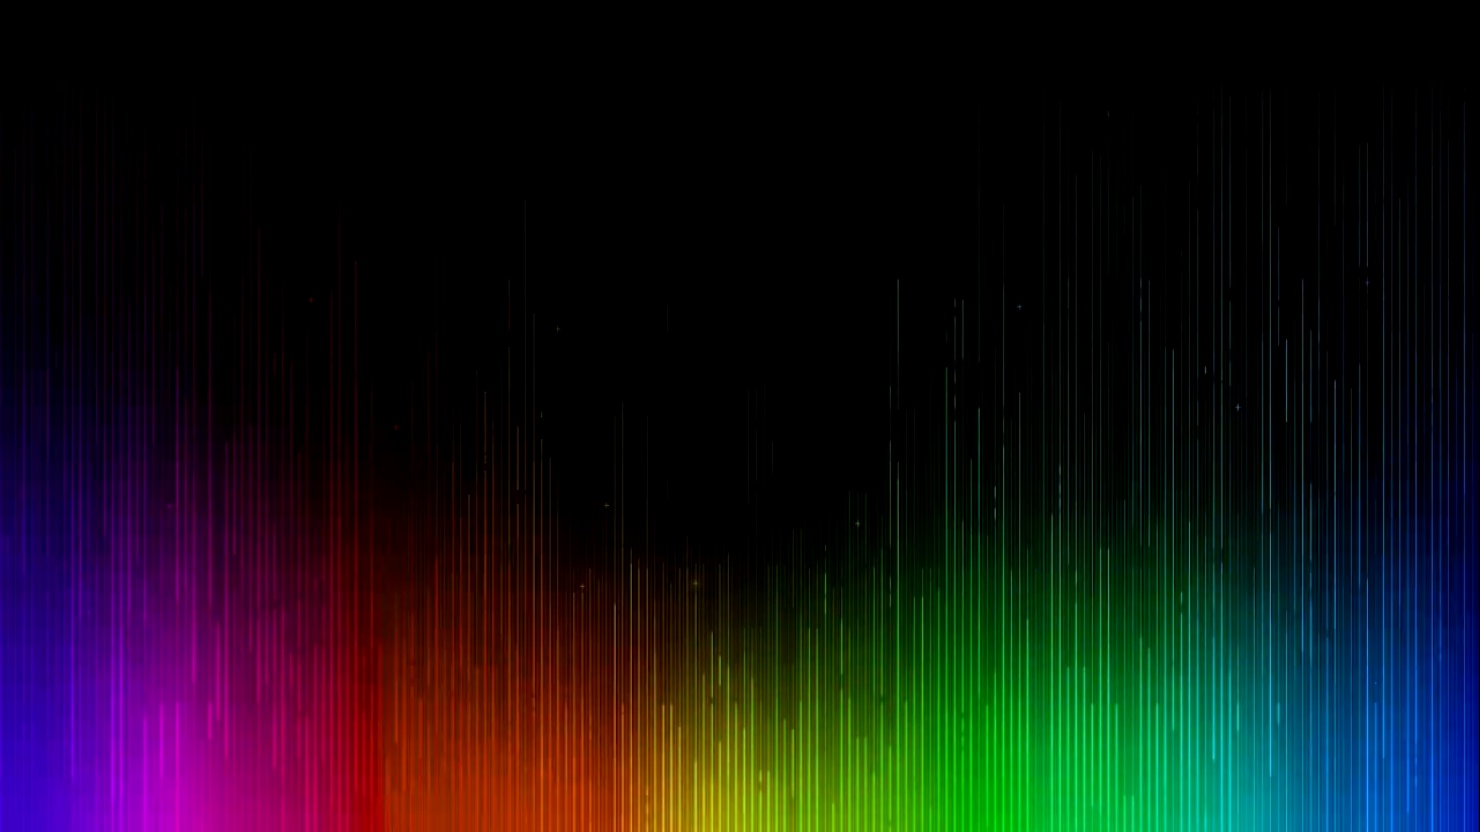 Razer Chroma RGB Spectrum 60fps by Necrox0216 on DeviantArt